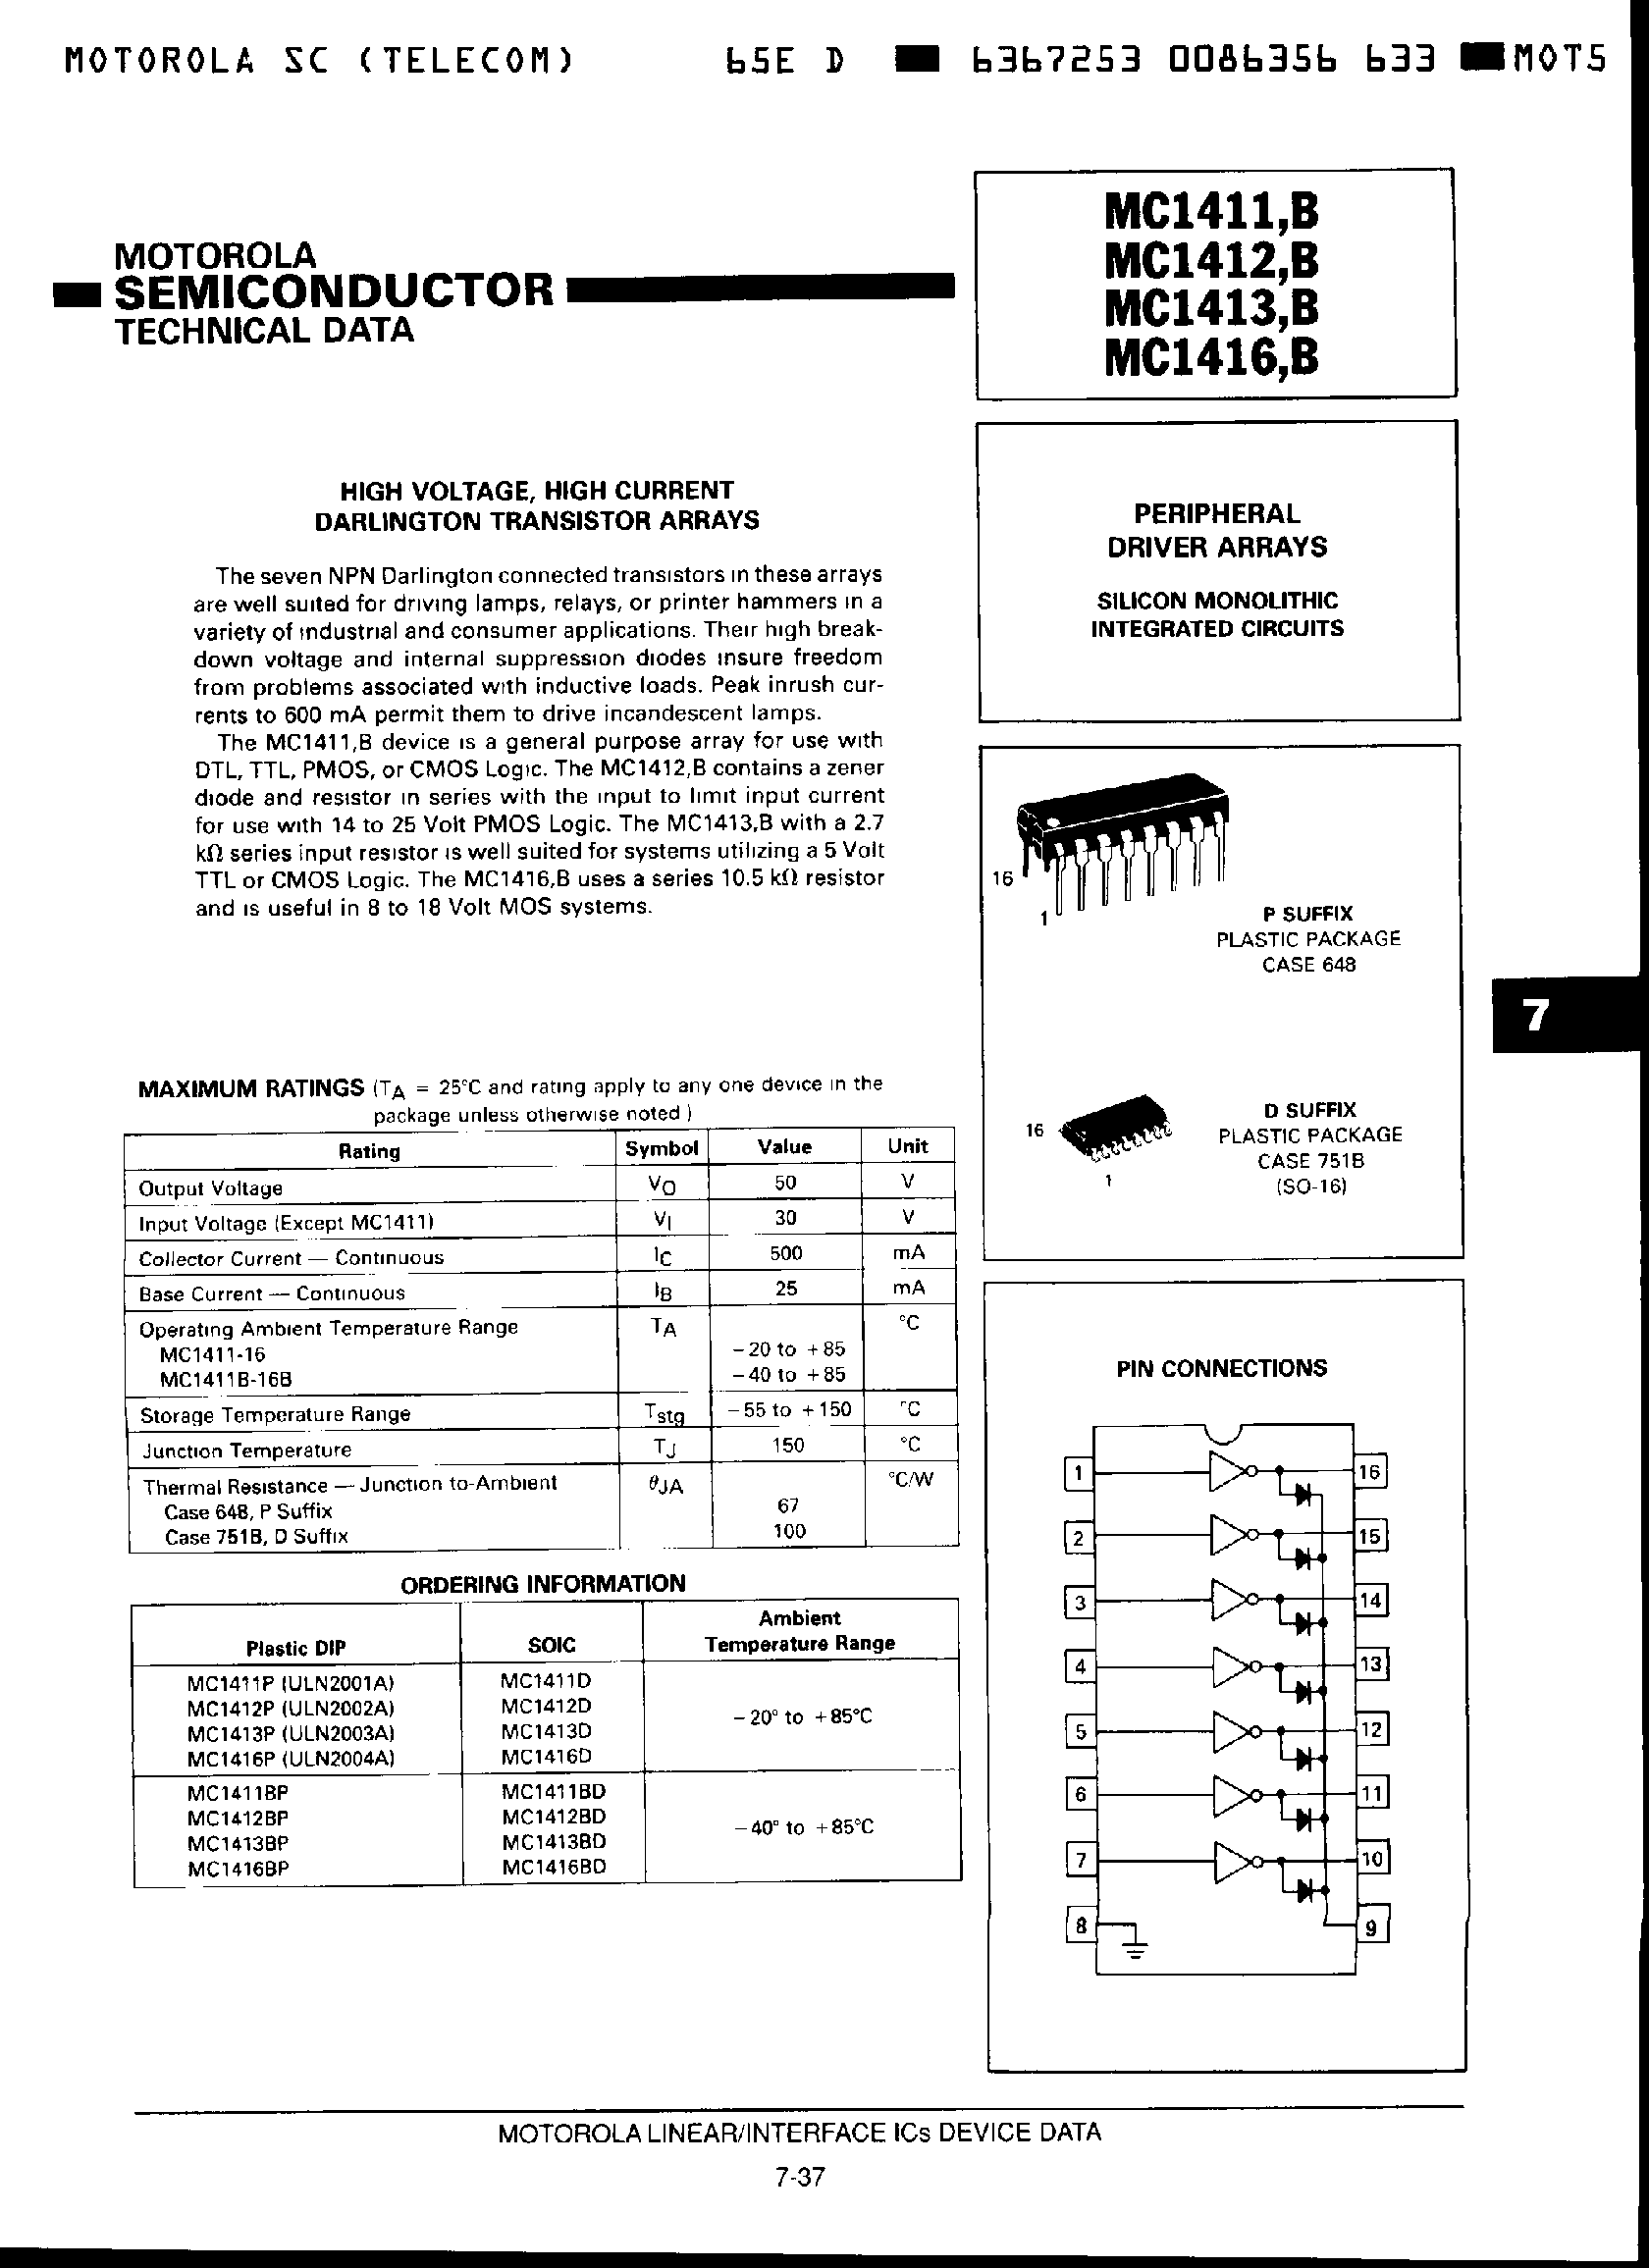 Datasheet MC1412 - PERIPHERAL DRIVER ARRAYS page 1